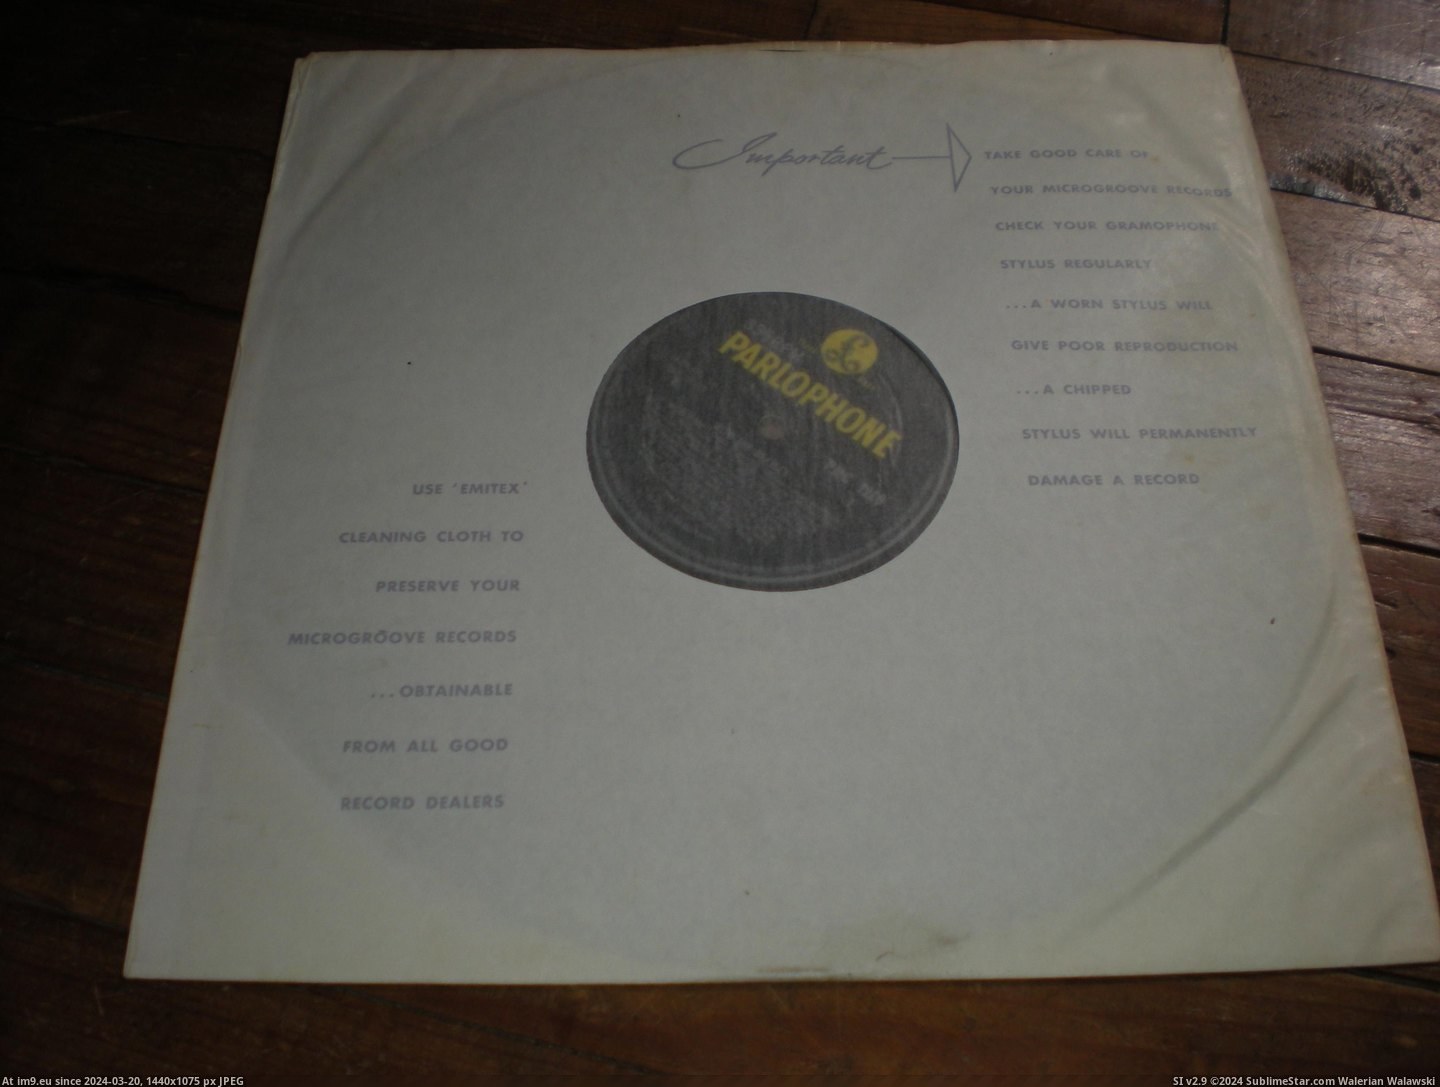  #Decca  With The Decca 9 Pic. (Image of album new 1))